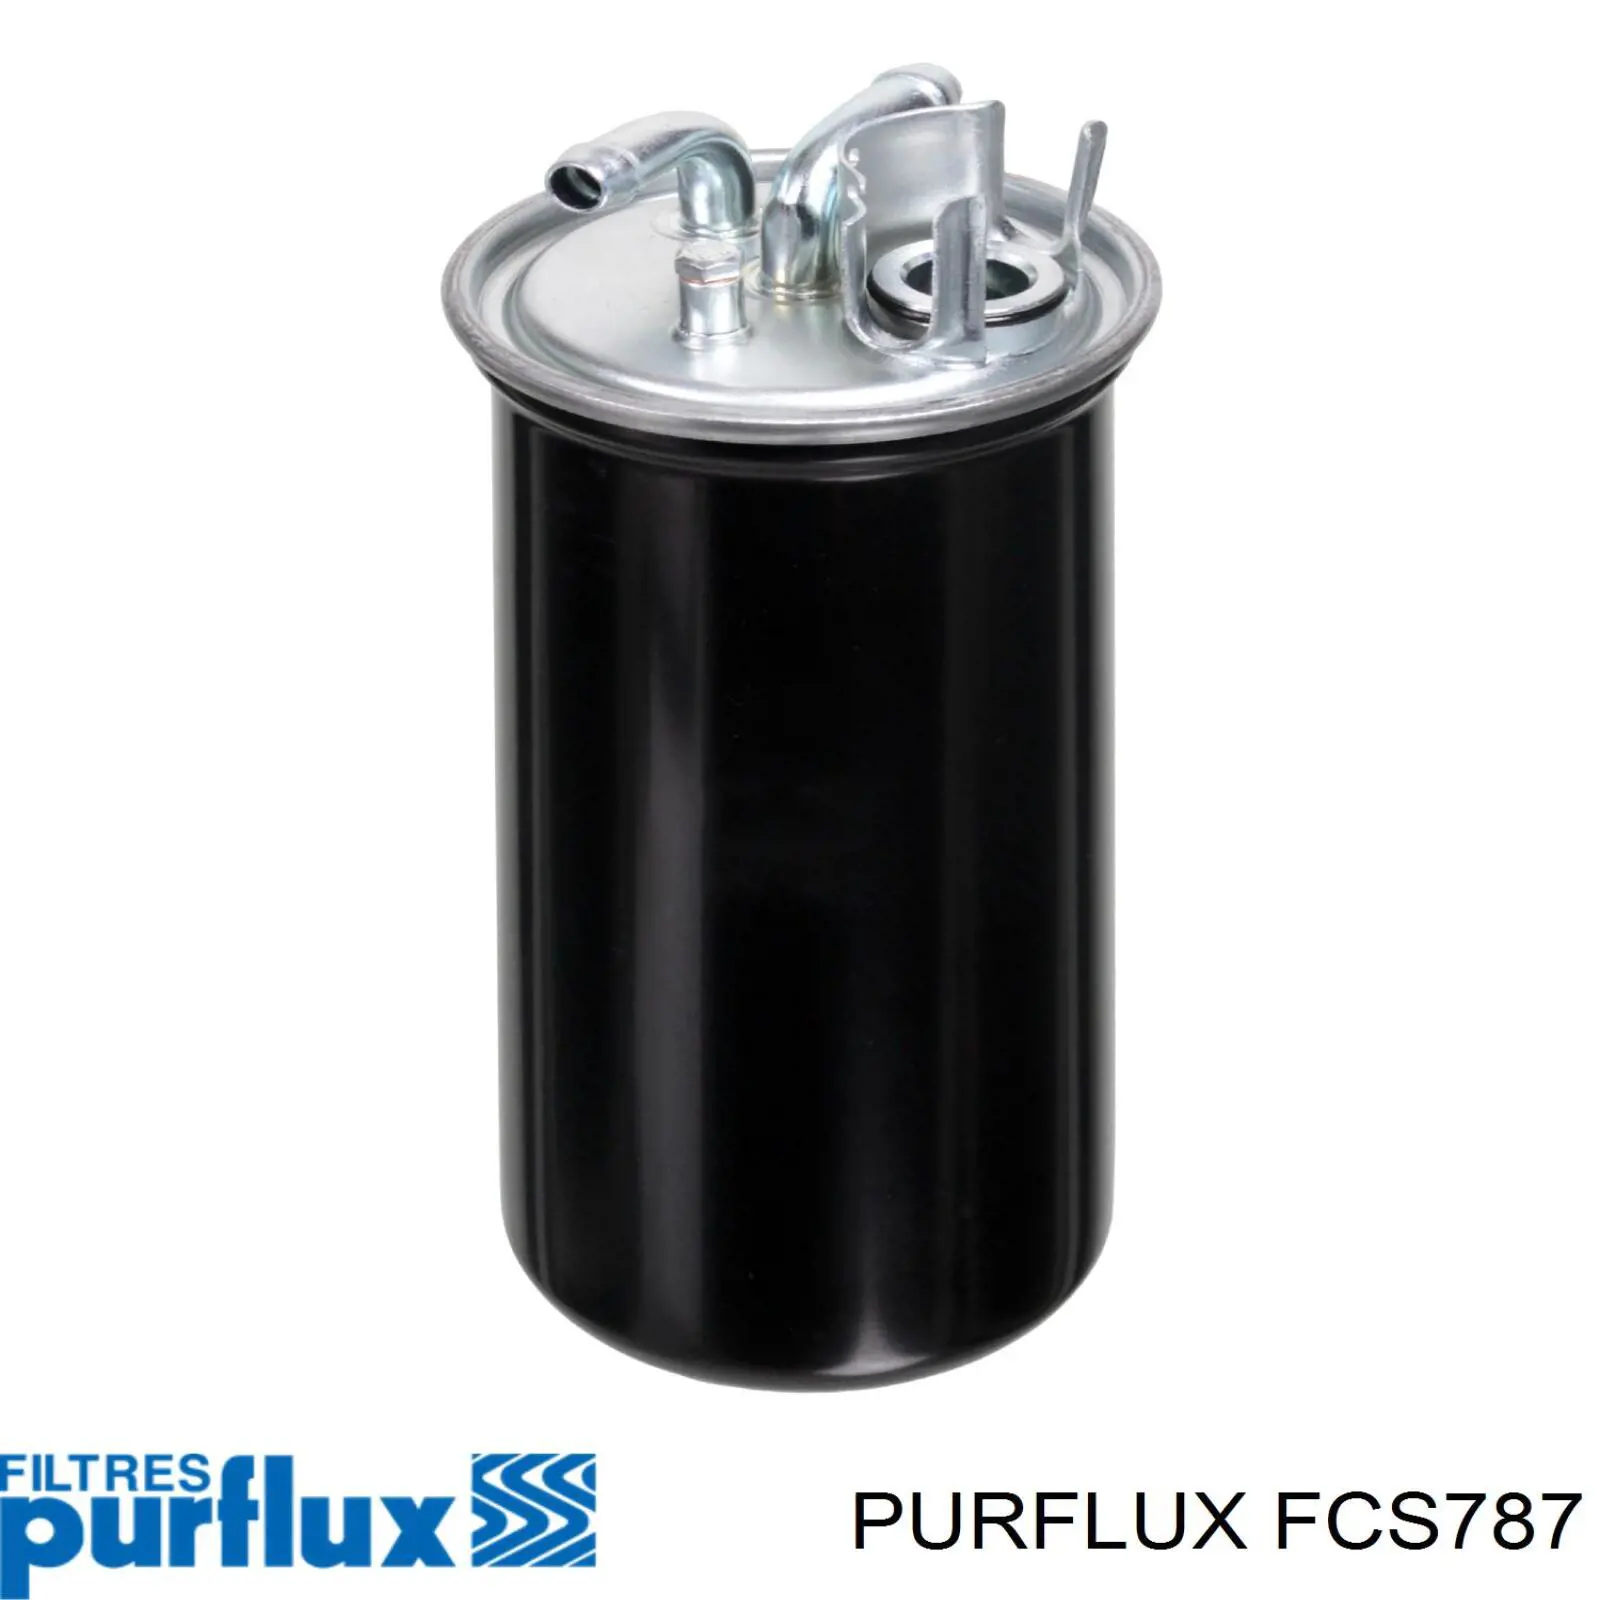 FCS787 Purflux filtro combustible